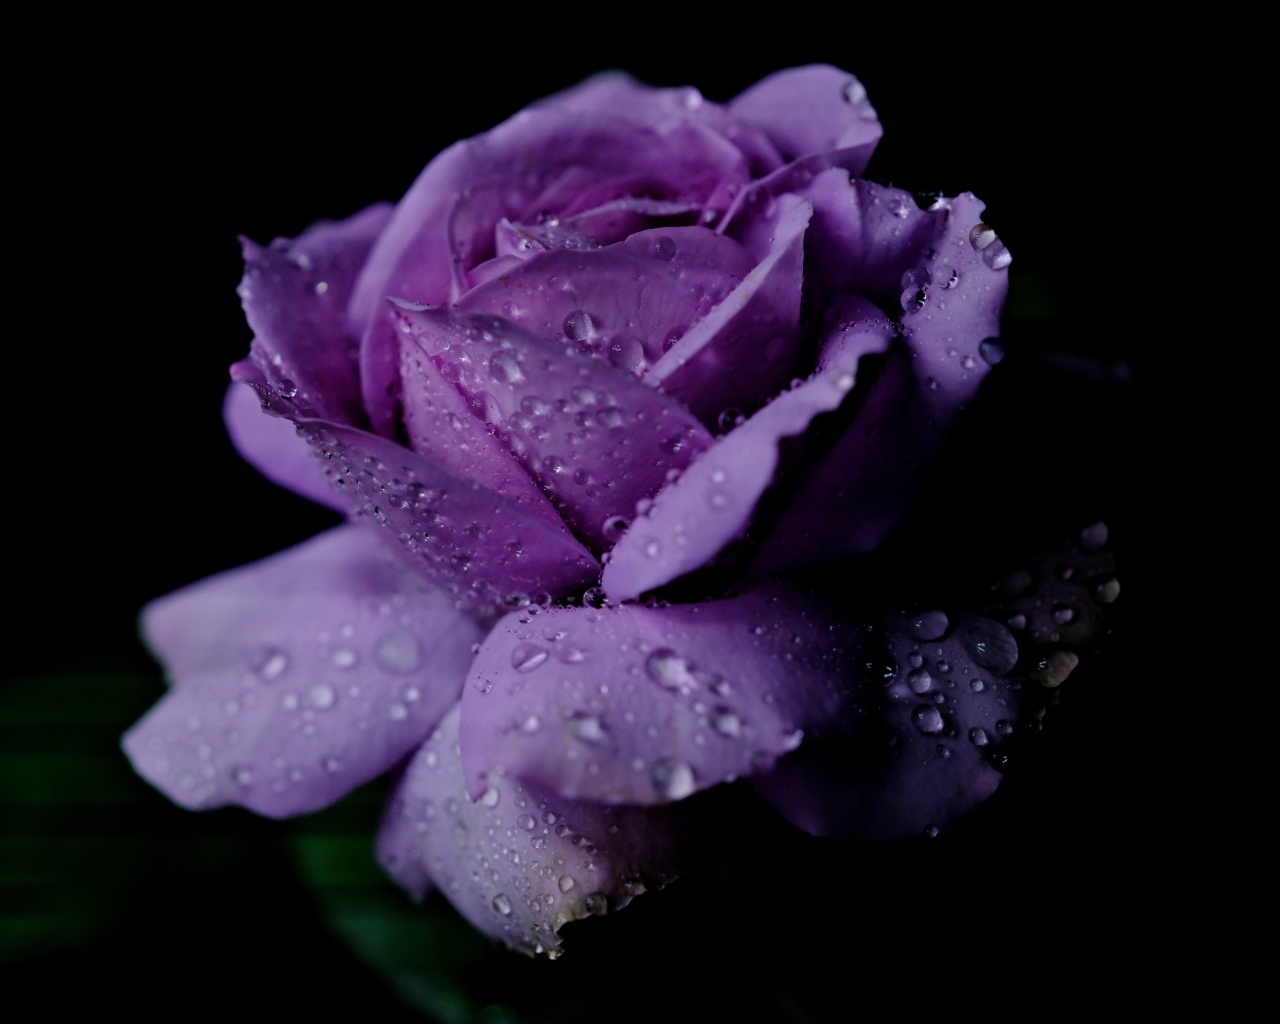 Delicate purple rose in dew drops